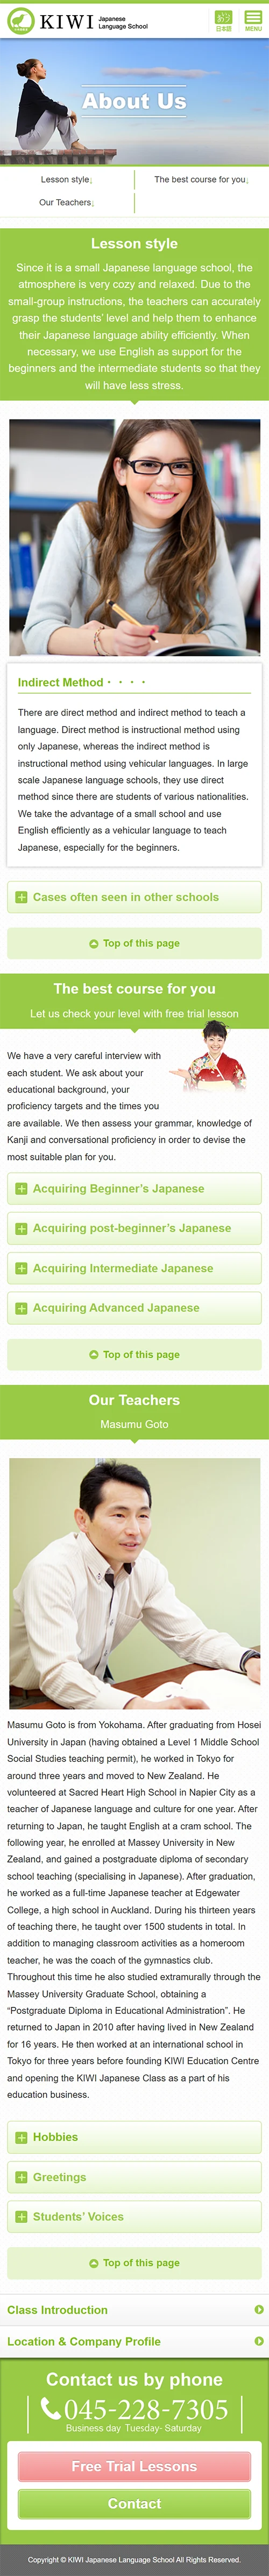 [KIWI教育センター] KIWI日本語教室とはページ | スマホビュー